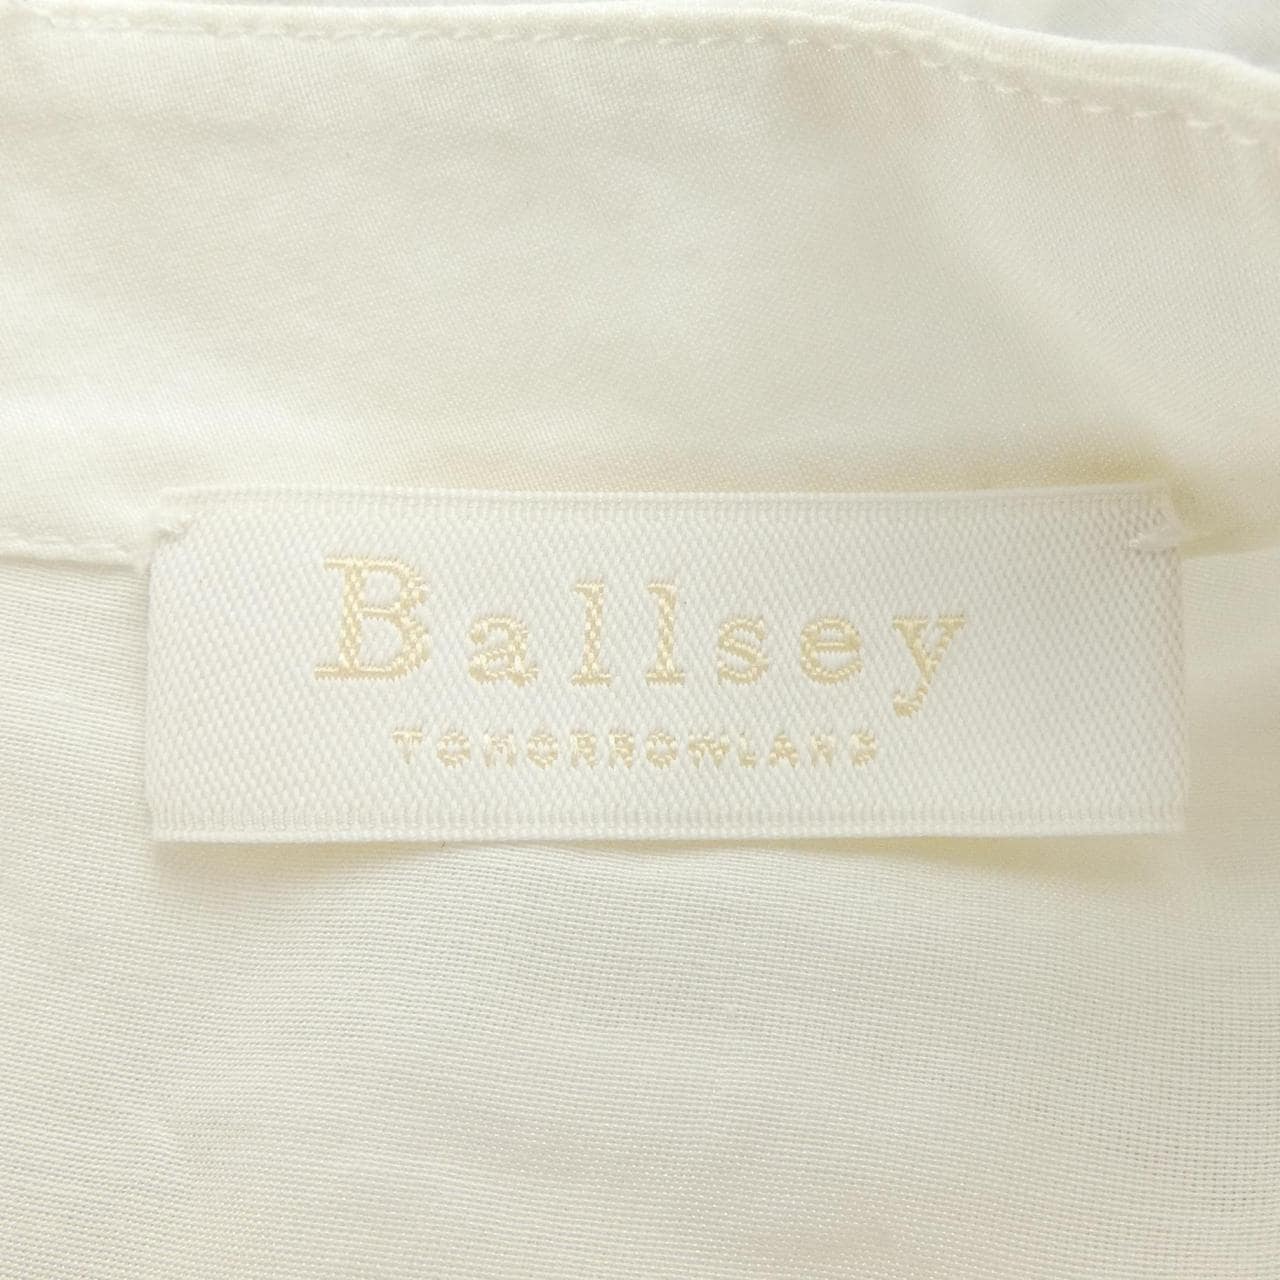 BALLSEY tops